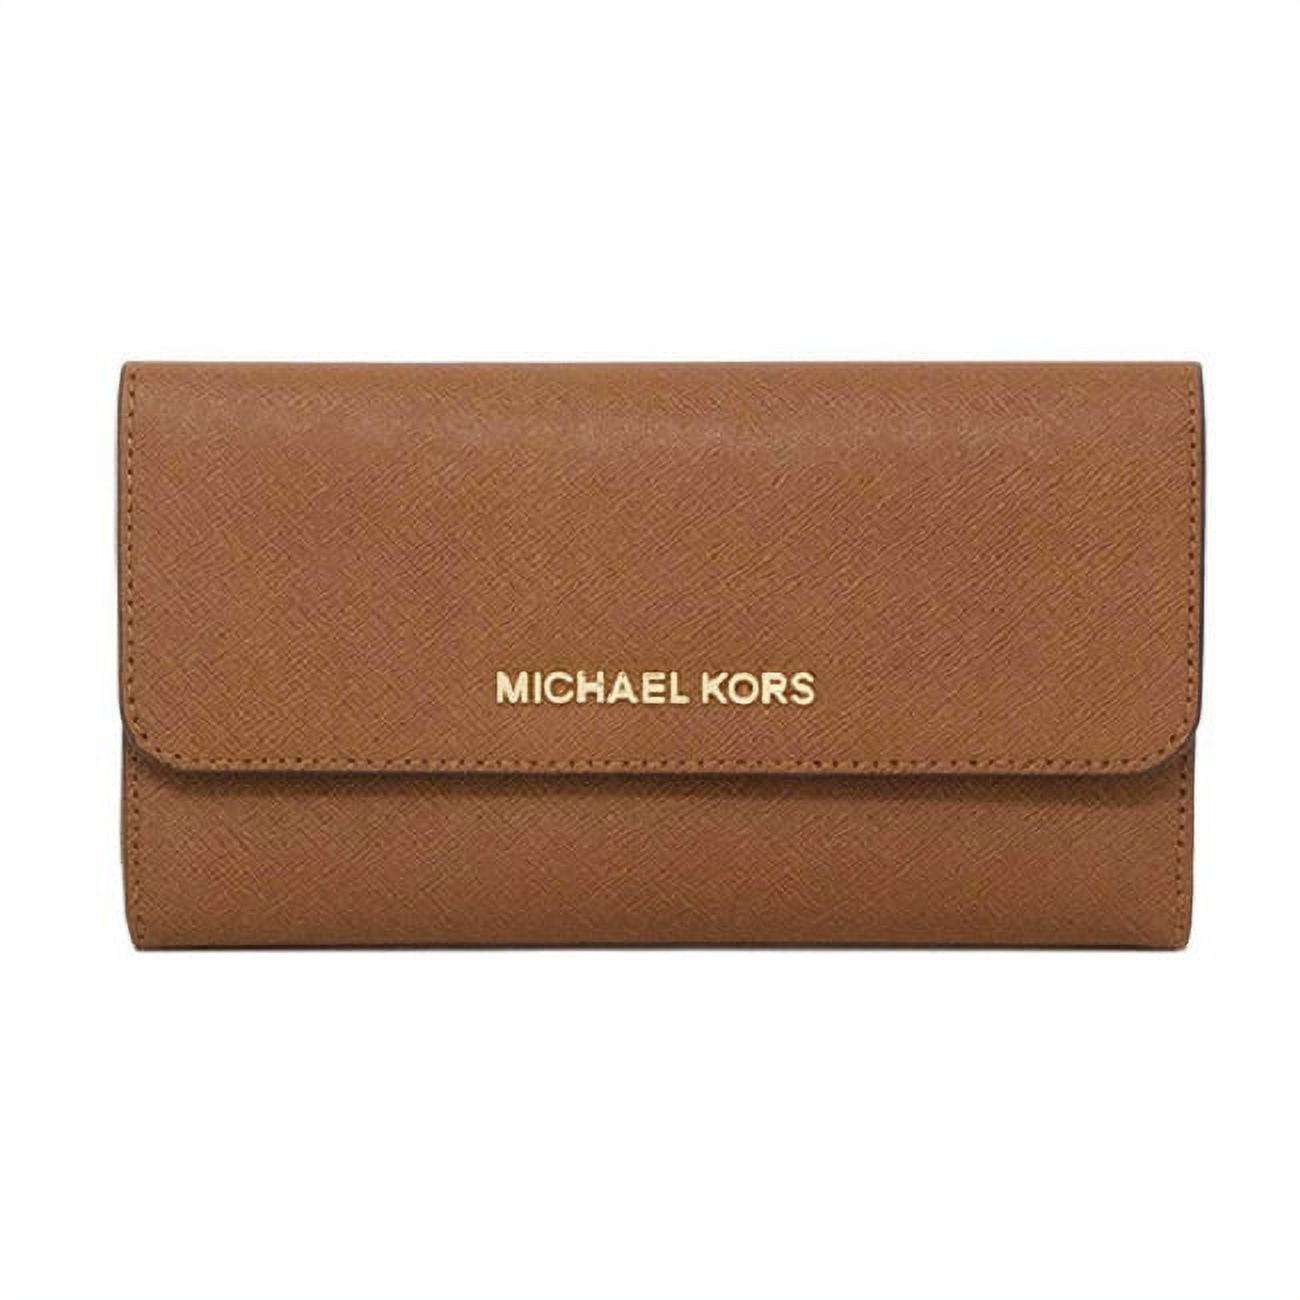 Michael Kors Large Trifold Wallet